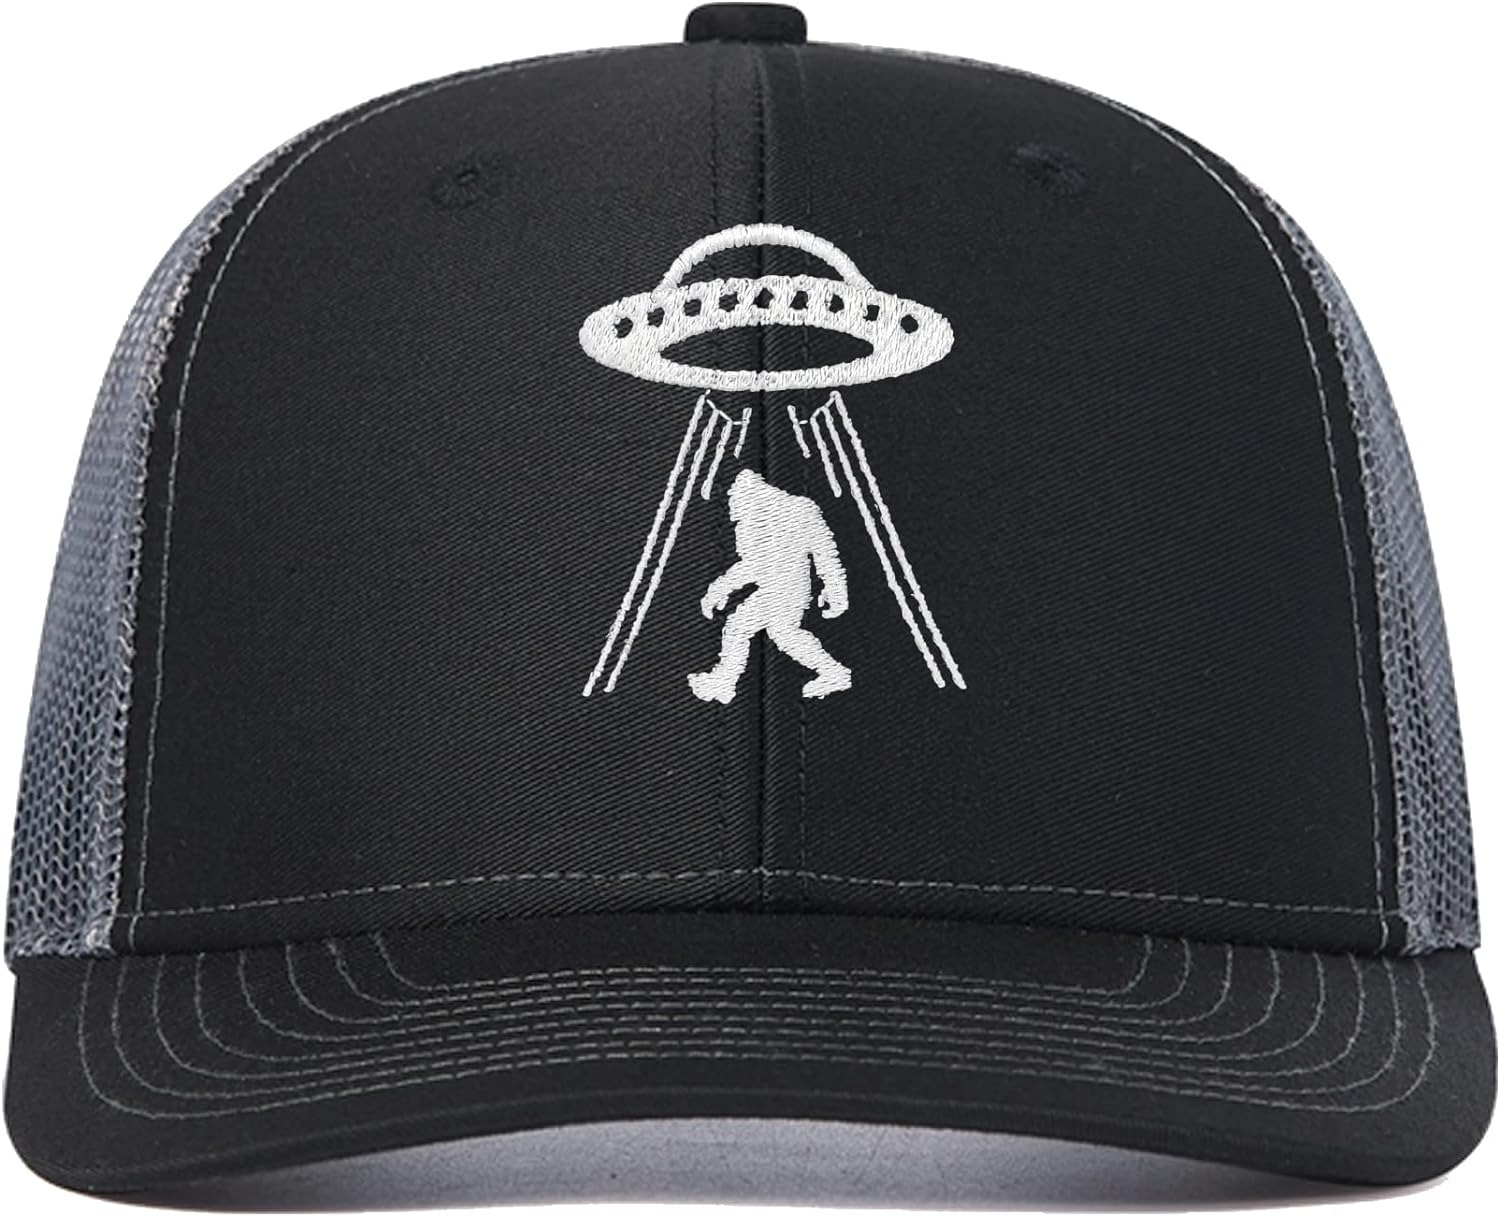 Embroidered Baseball Hats for Men Women